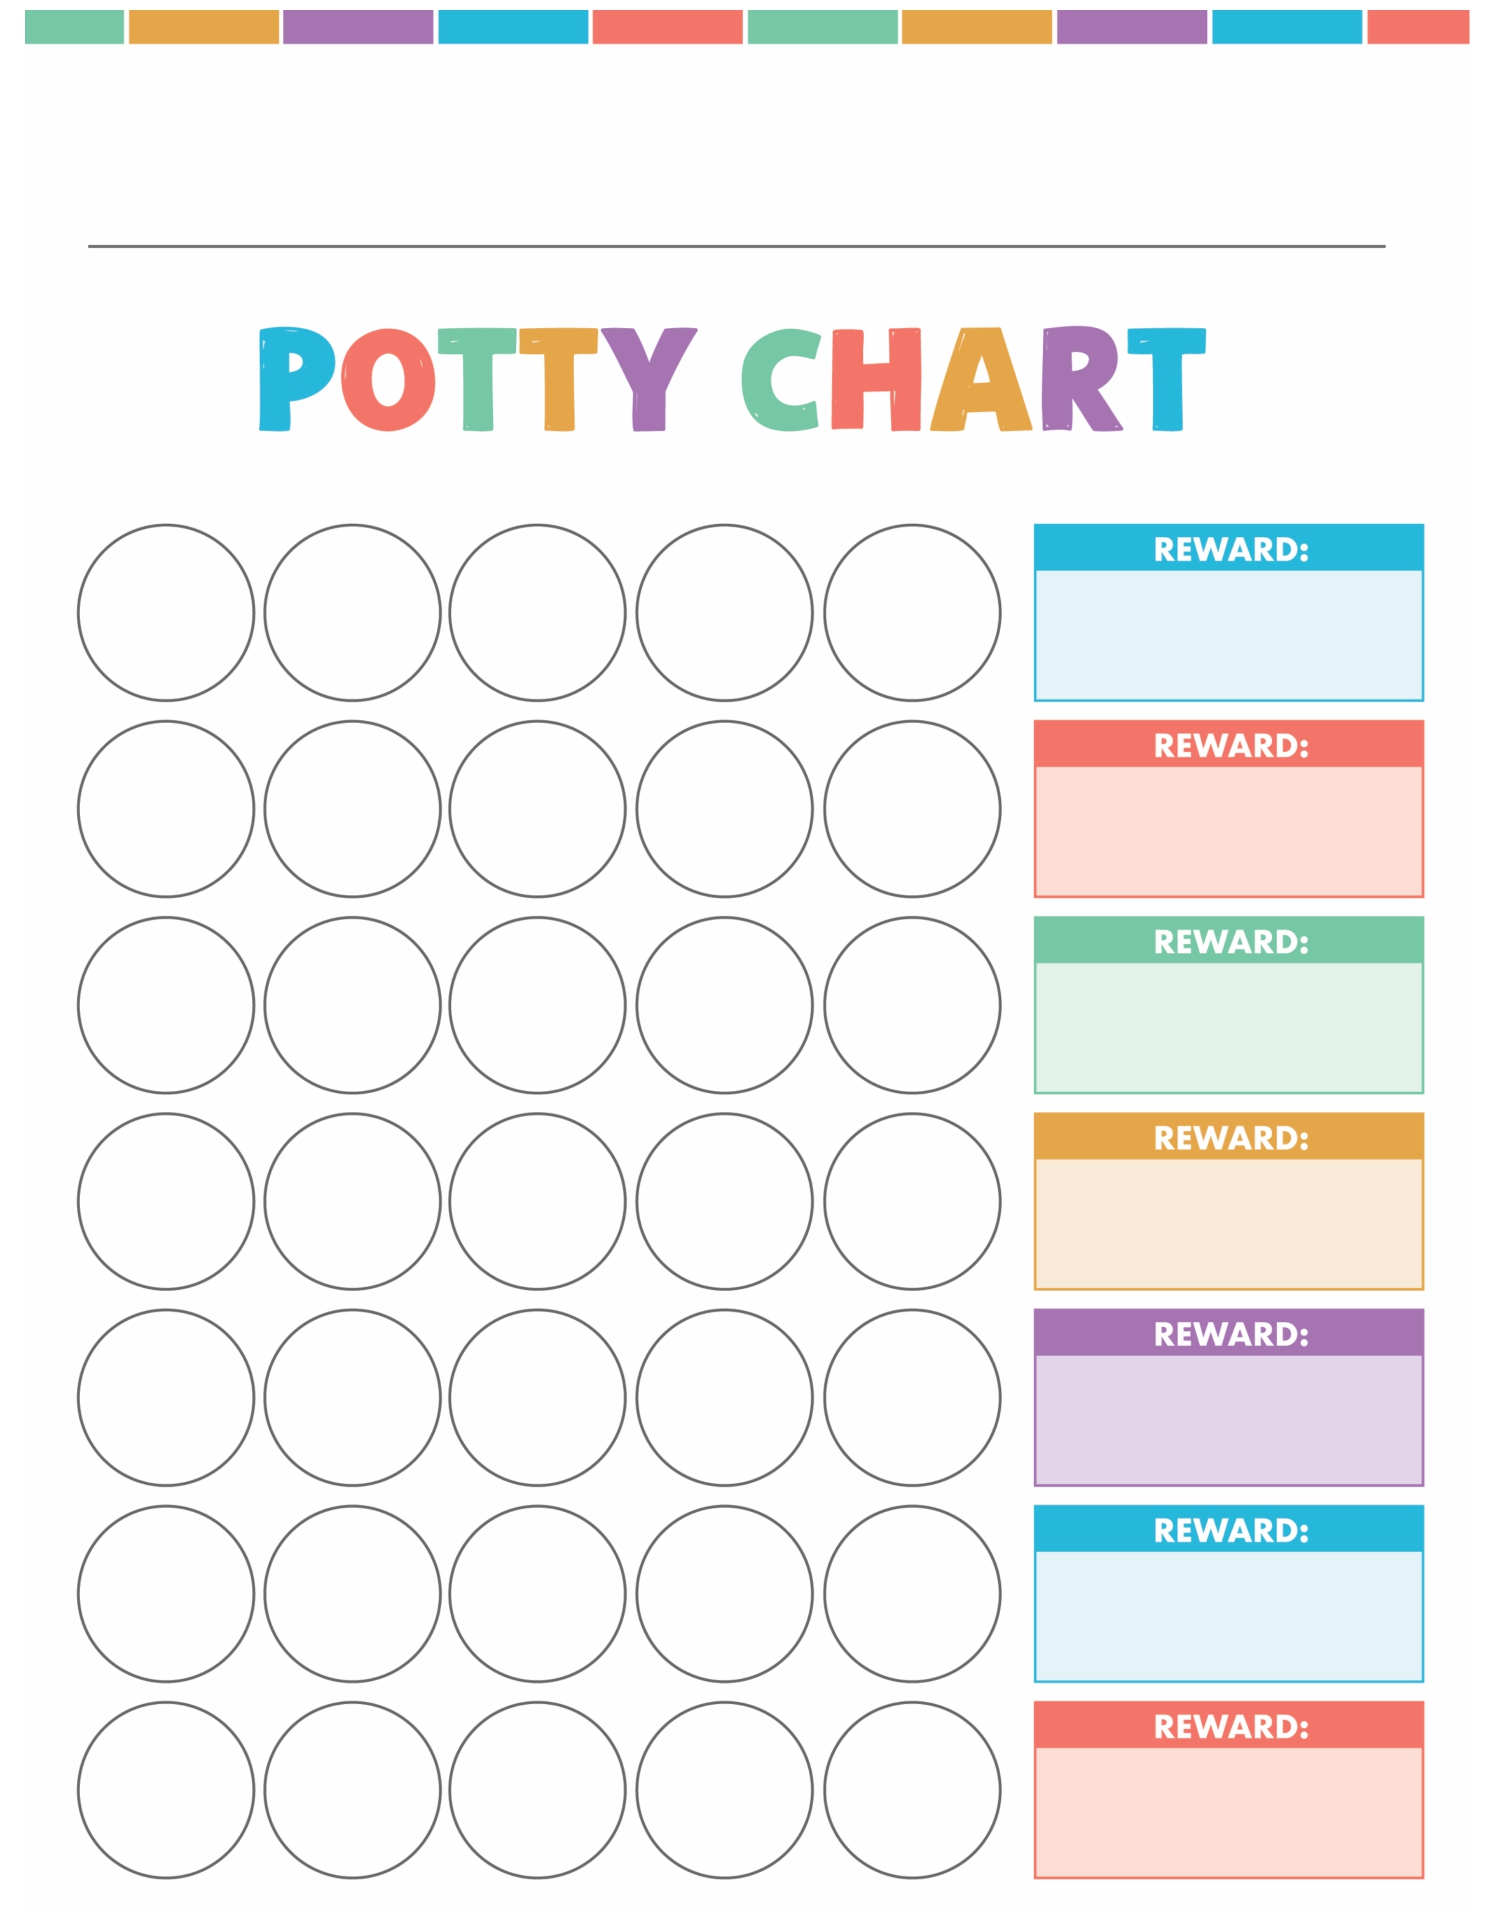 Free Potty Training Chart Printable